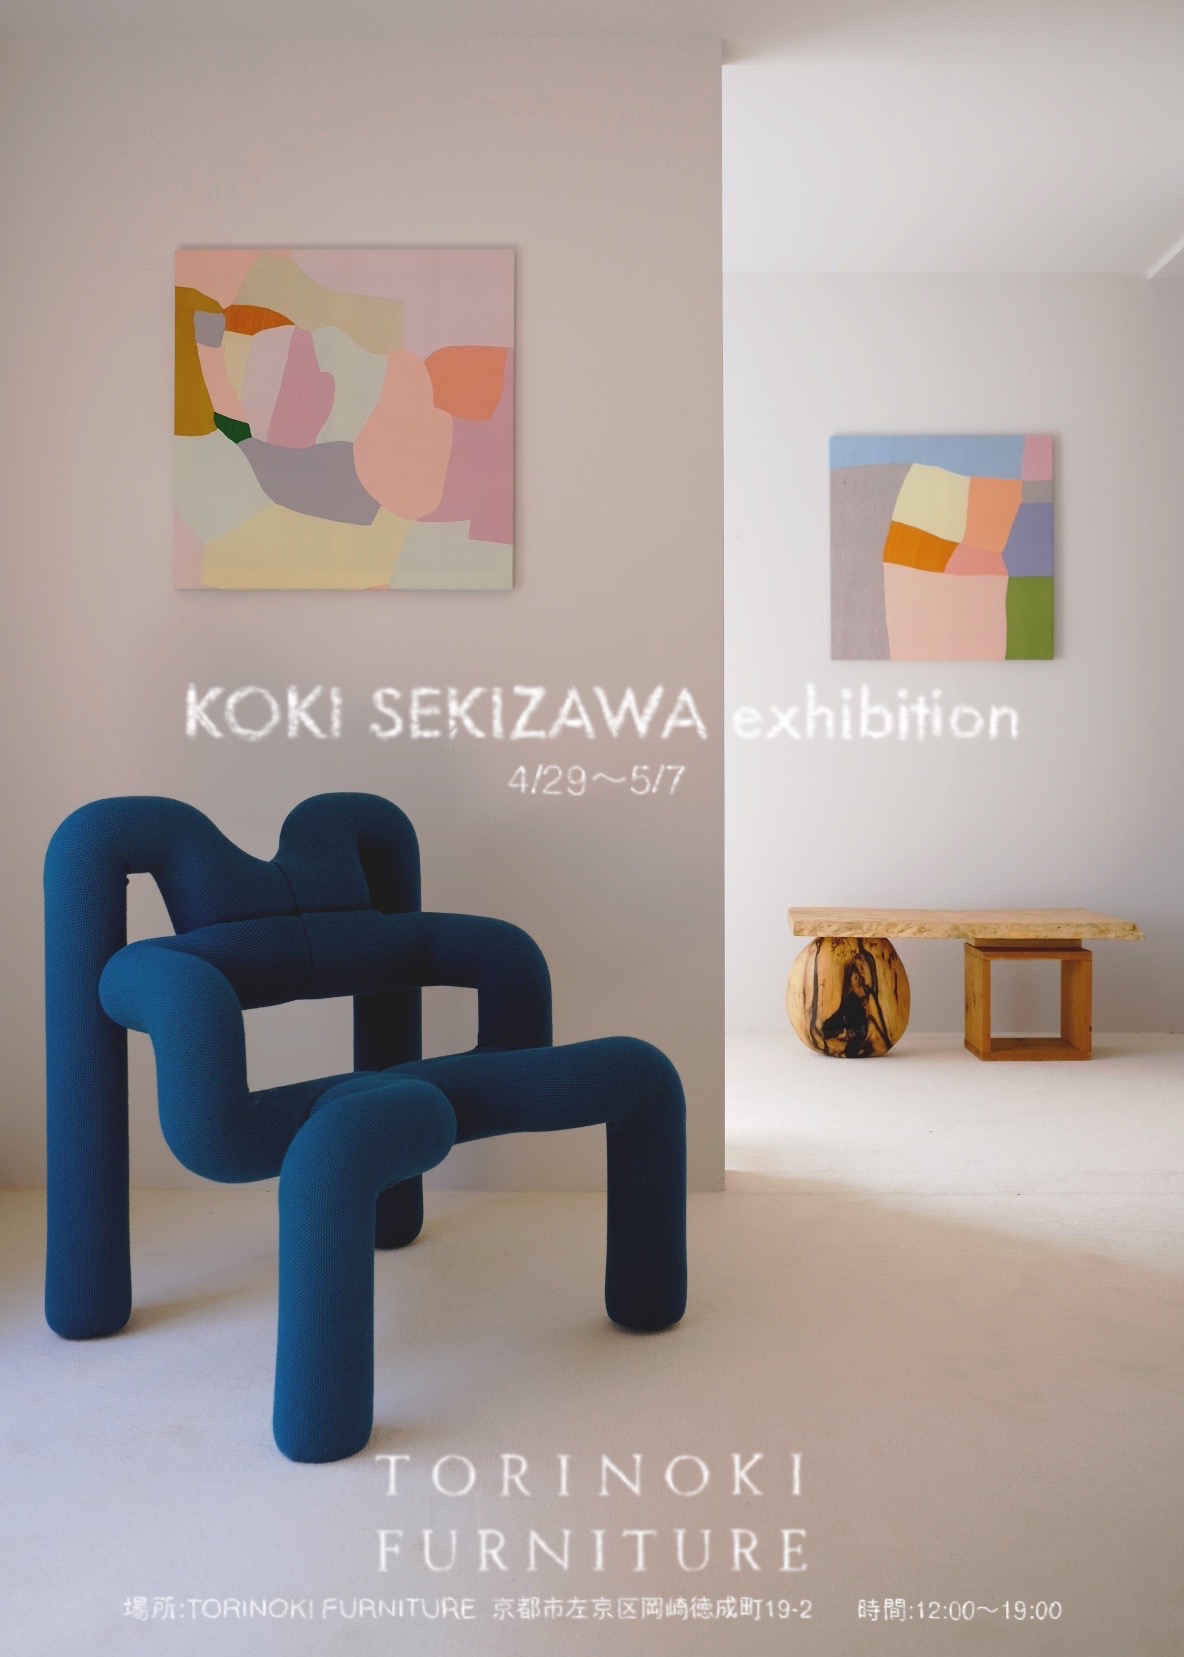 KOKI SEKIZAWA exhibition